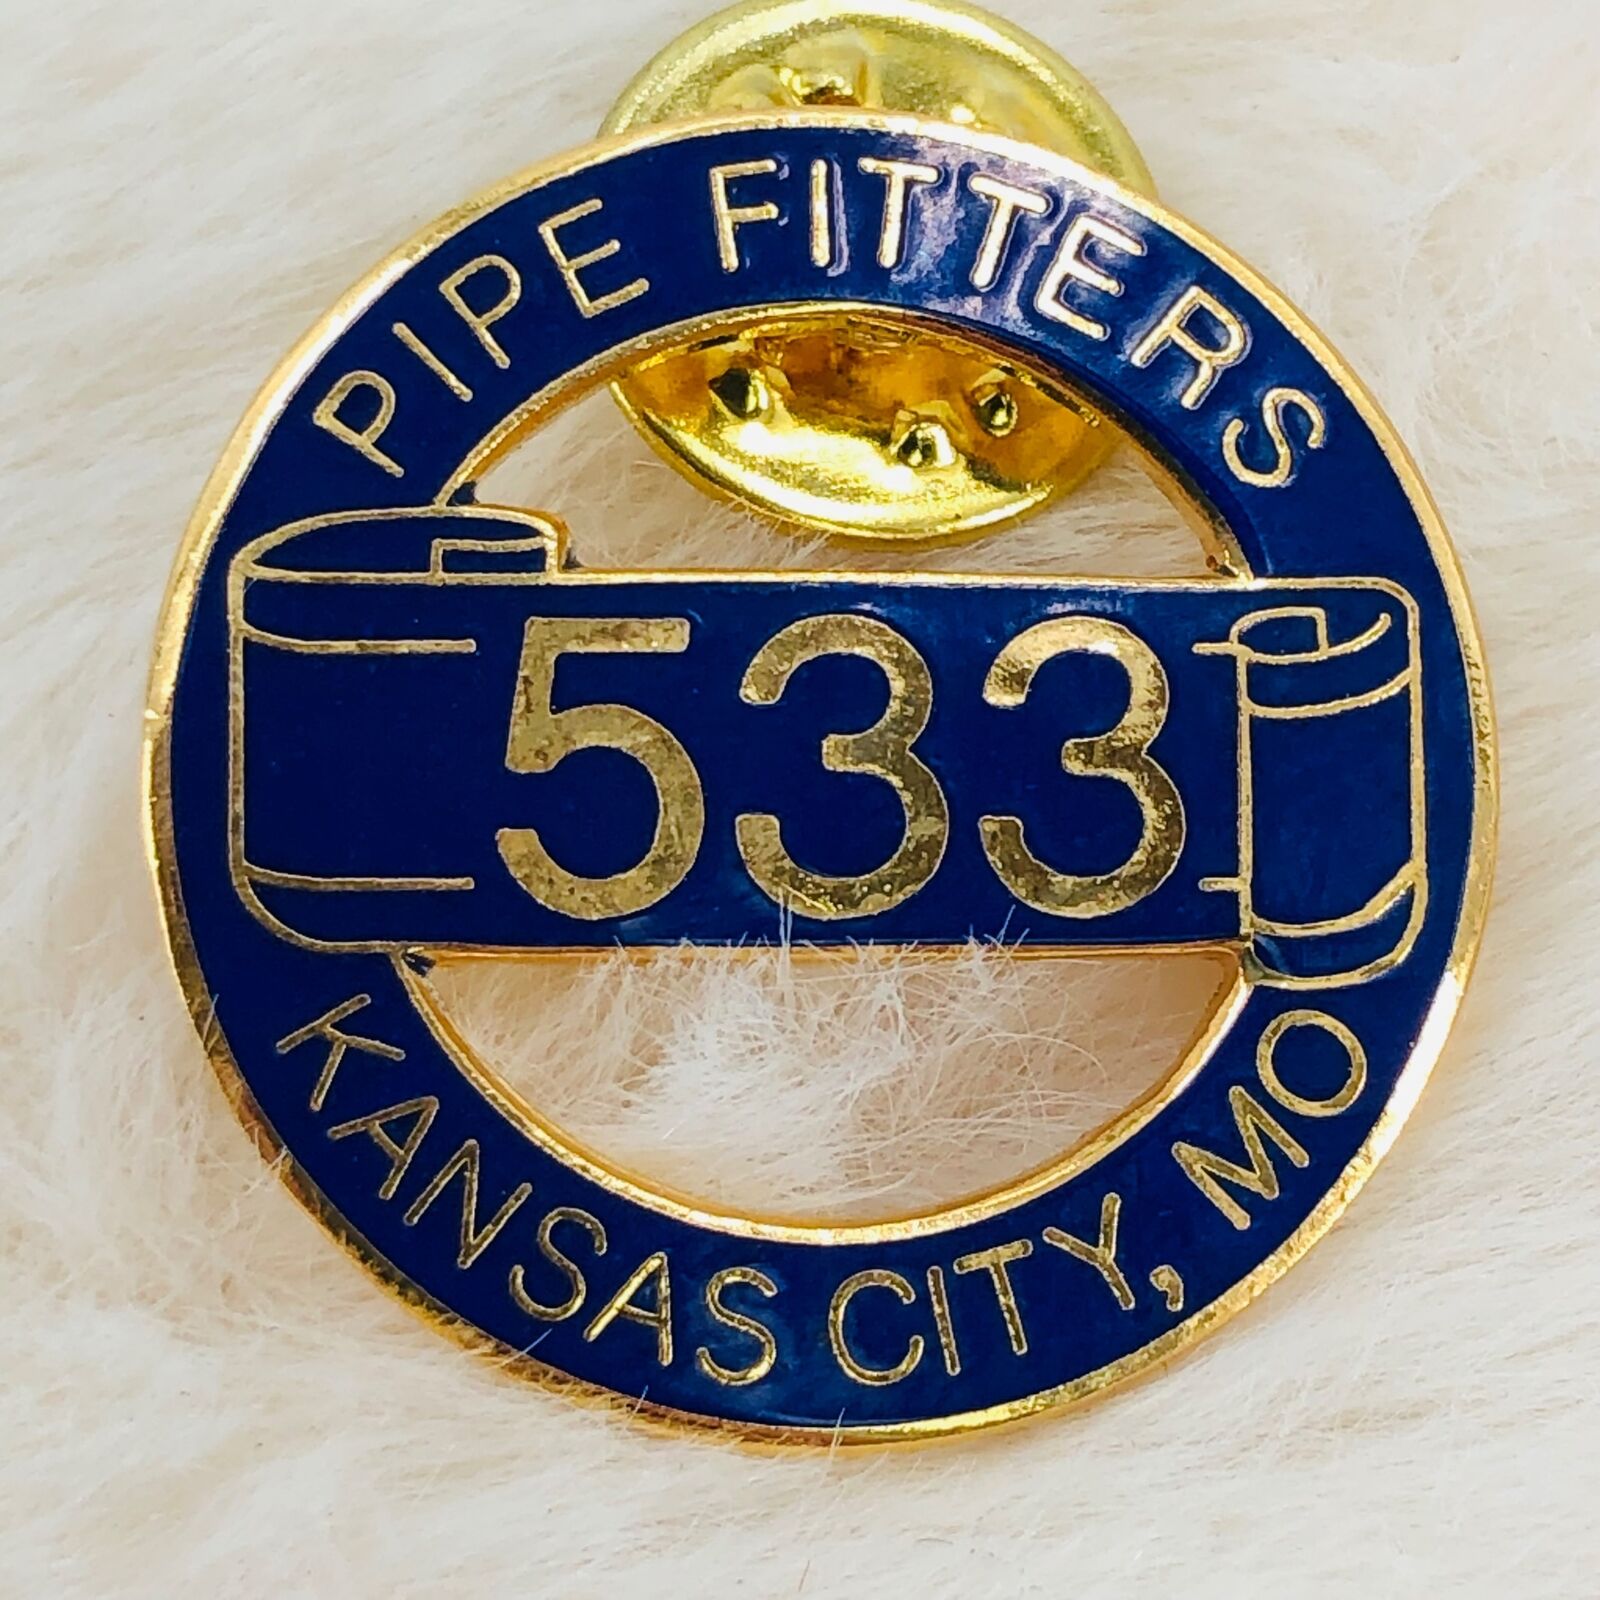 UA Plumbers Pipefitters Local 533 Union Member Lapel Pin Kansas City Missouri